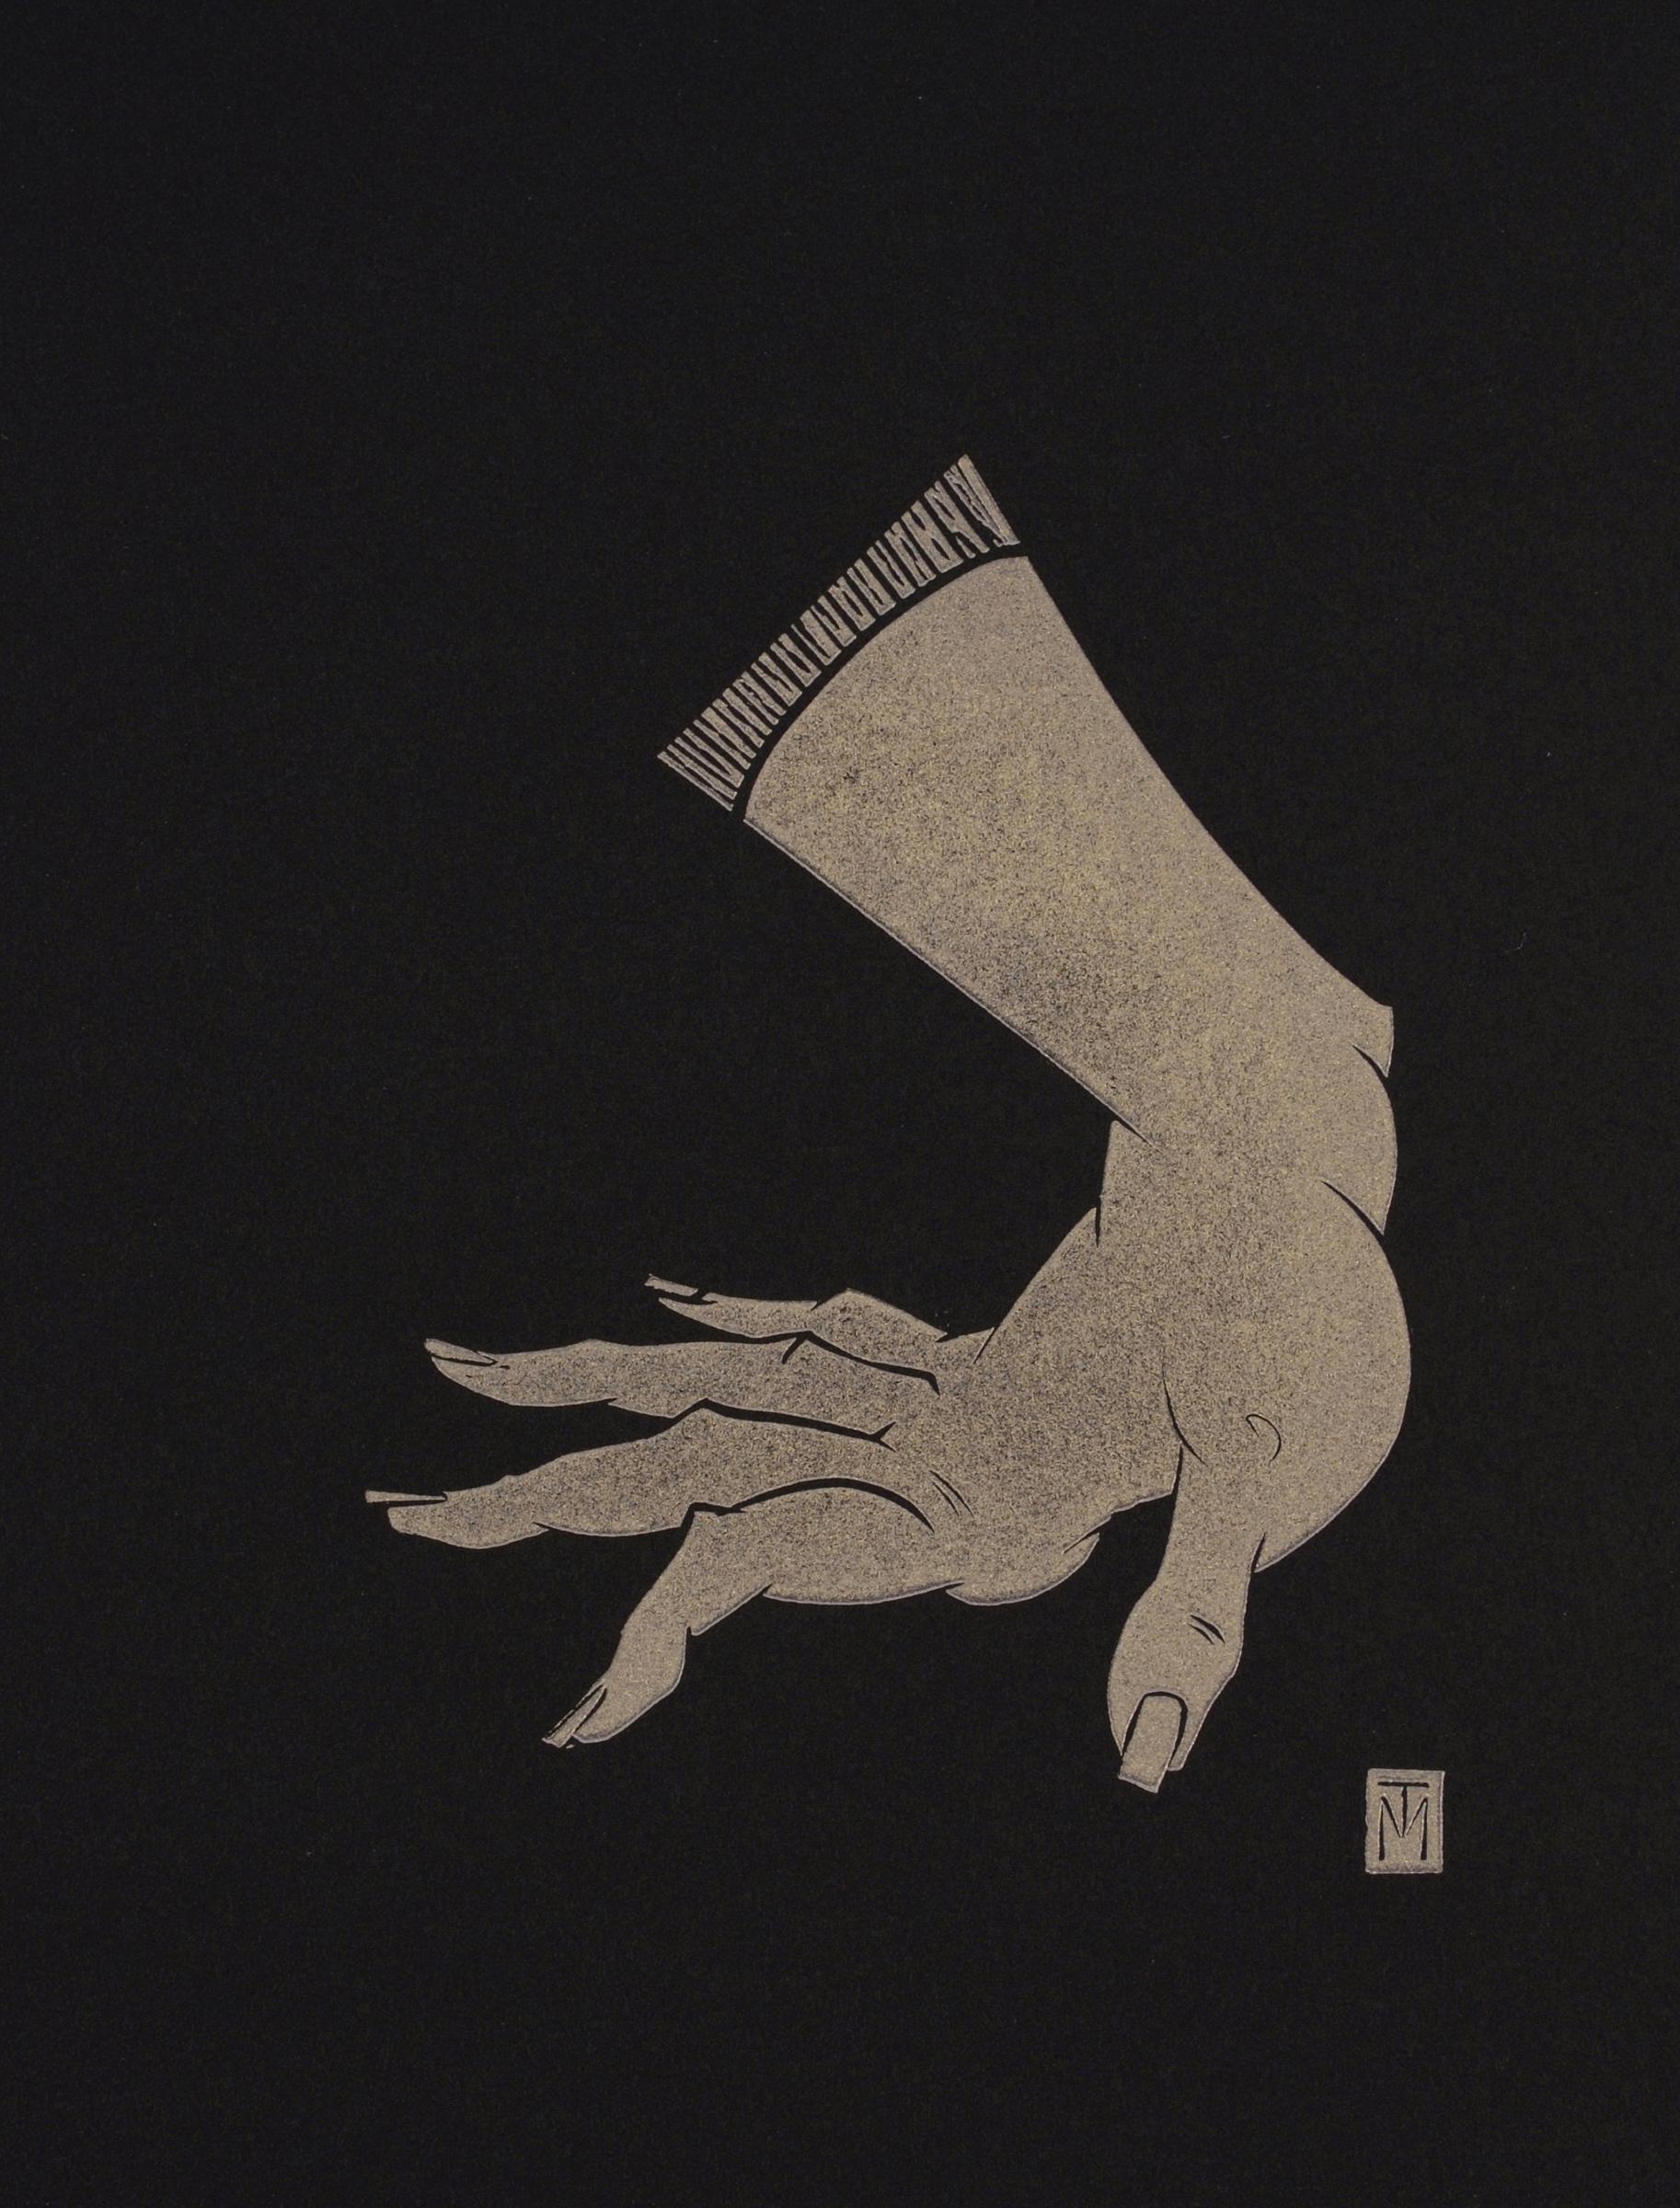 Martyn Tverdun Nude - "Hand" - gold block print on black paper